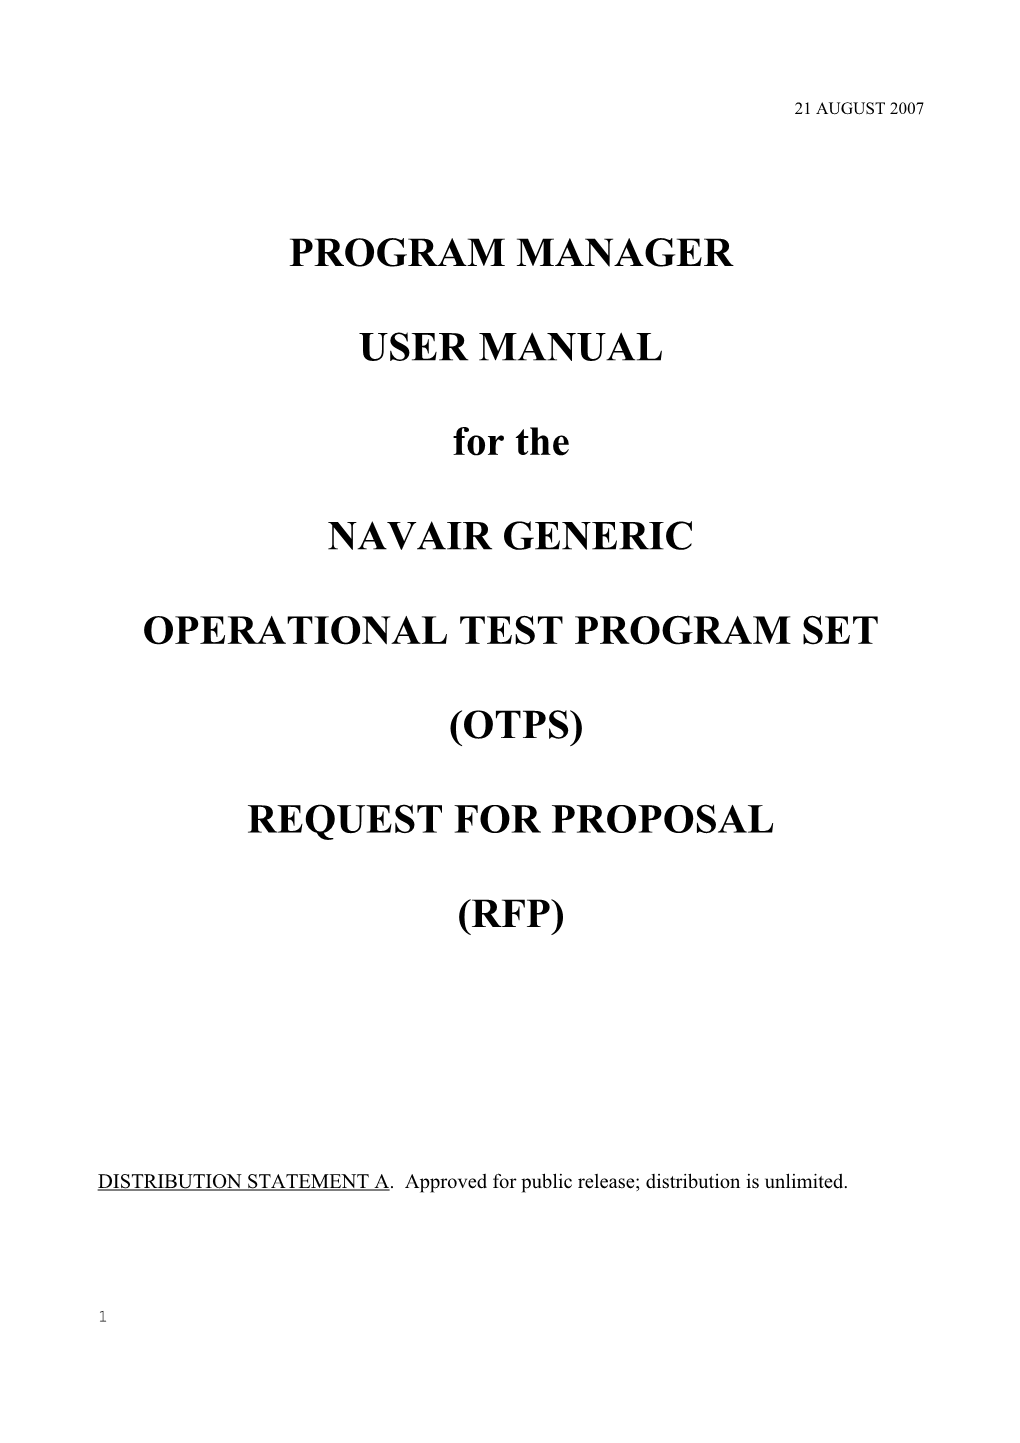 Operational Test Program Set